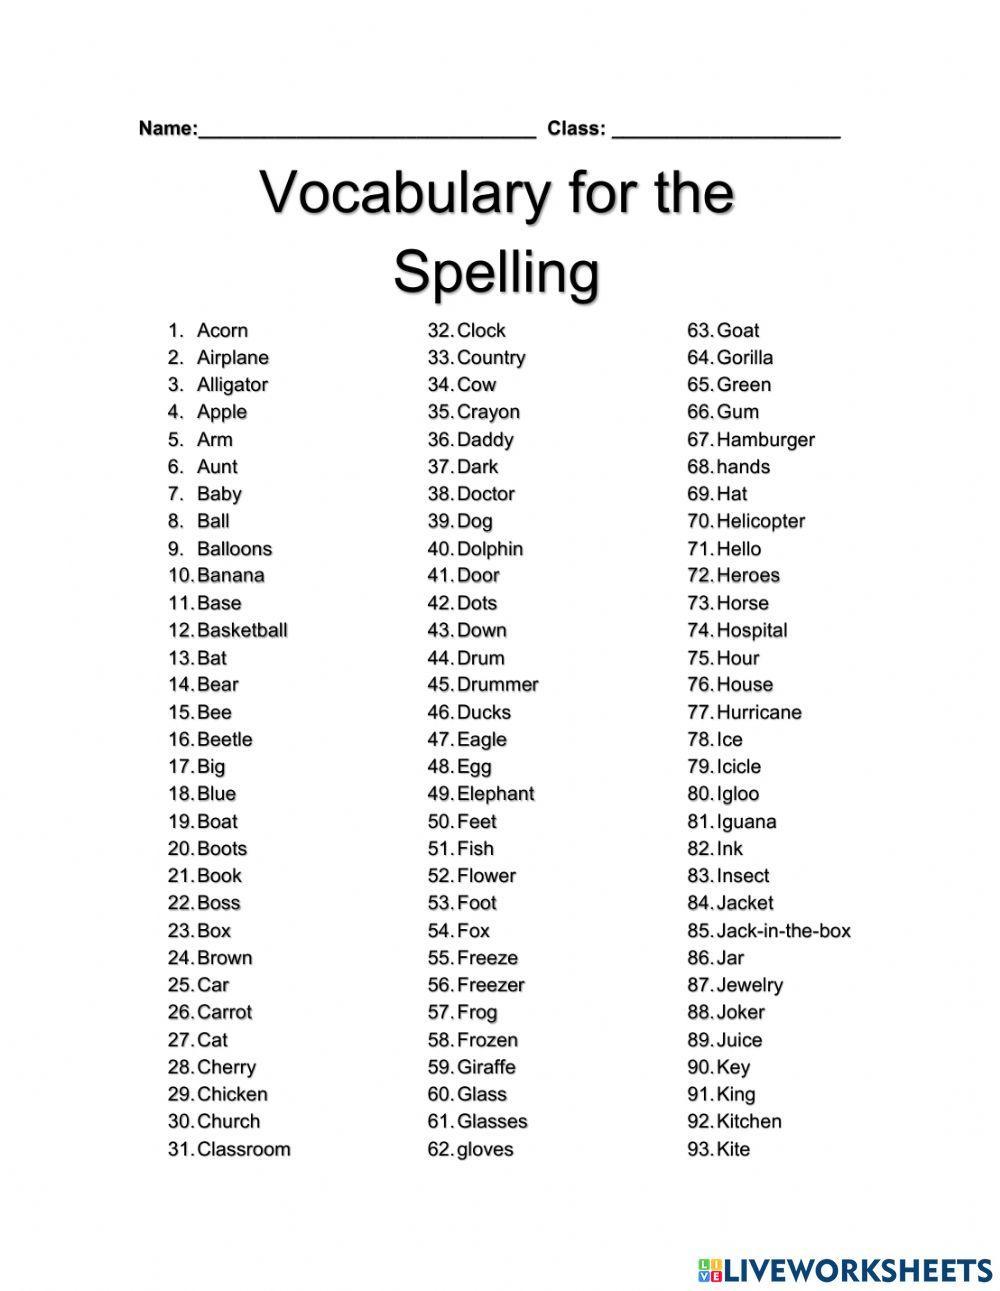 Spelling Bee Words